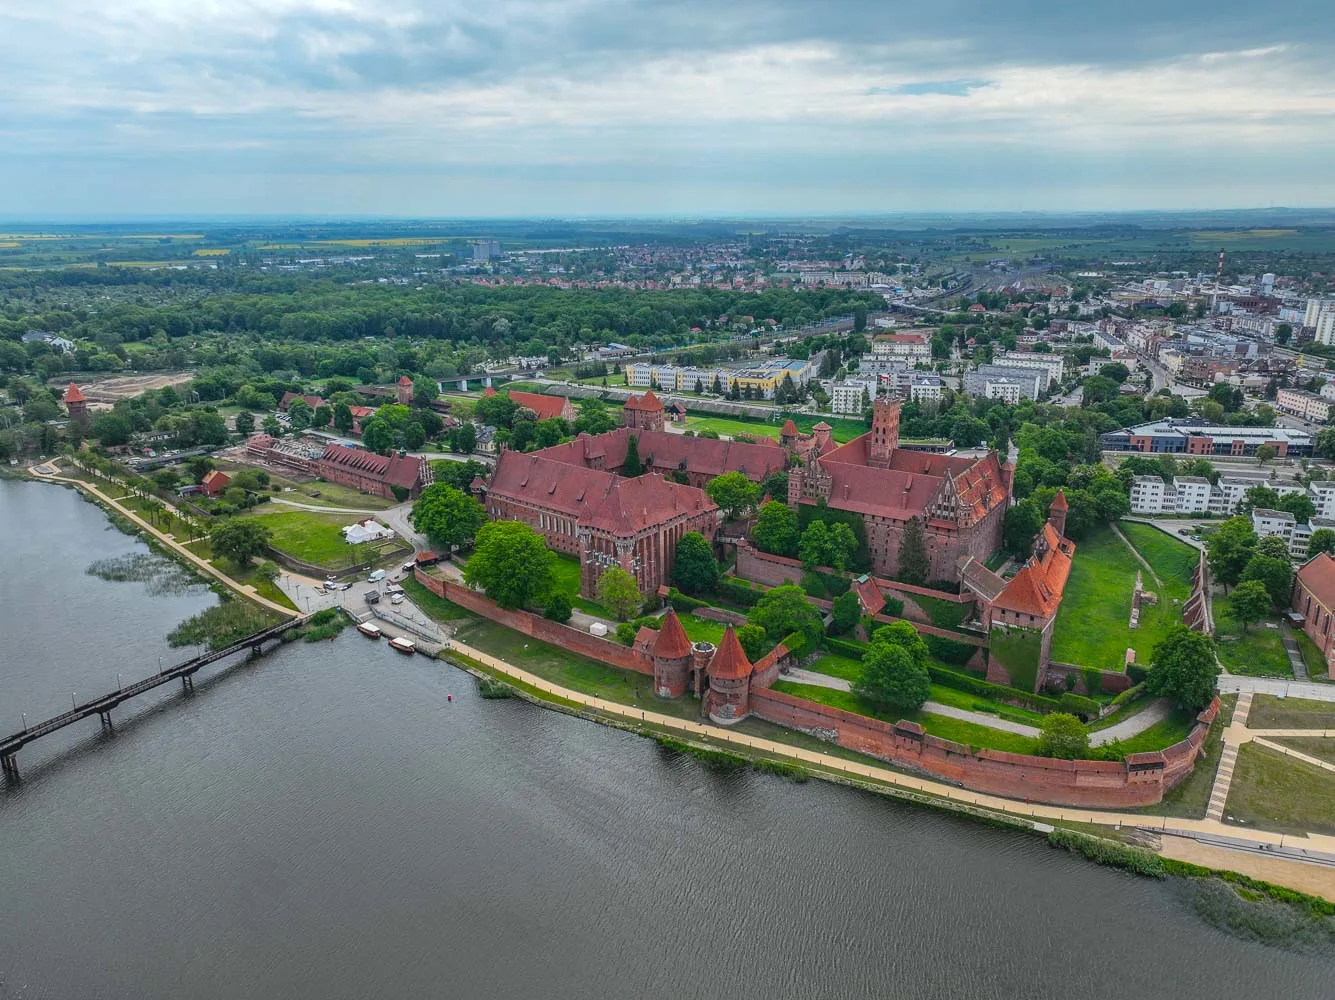 The impressive Malbork Castle from above